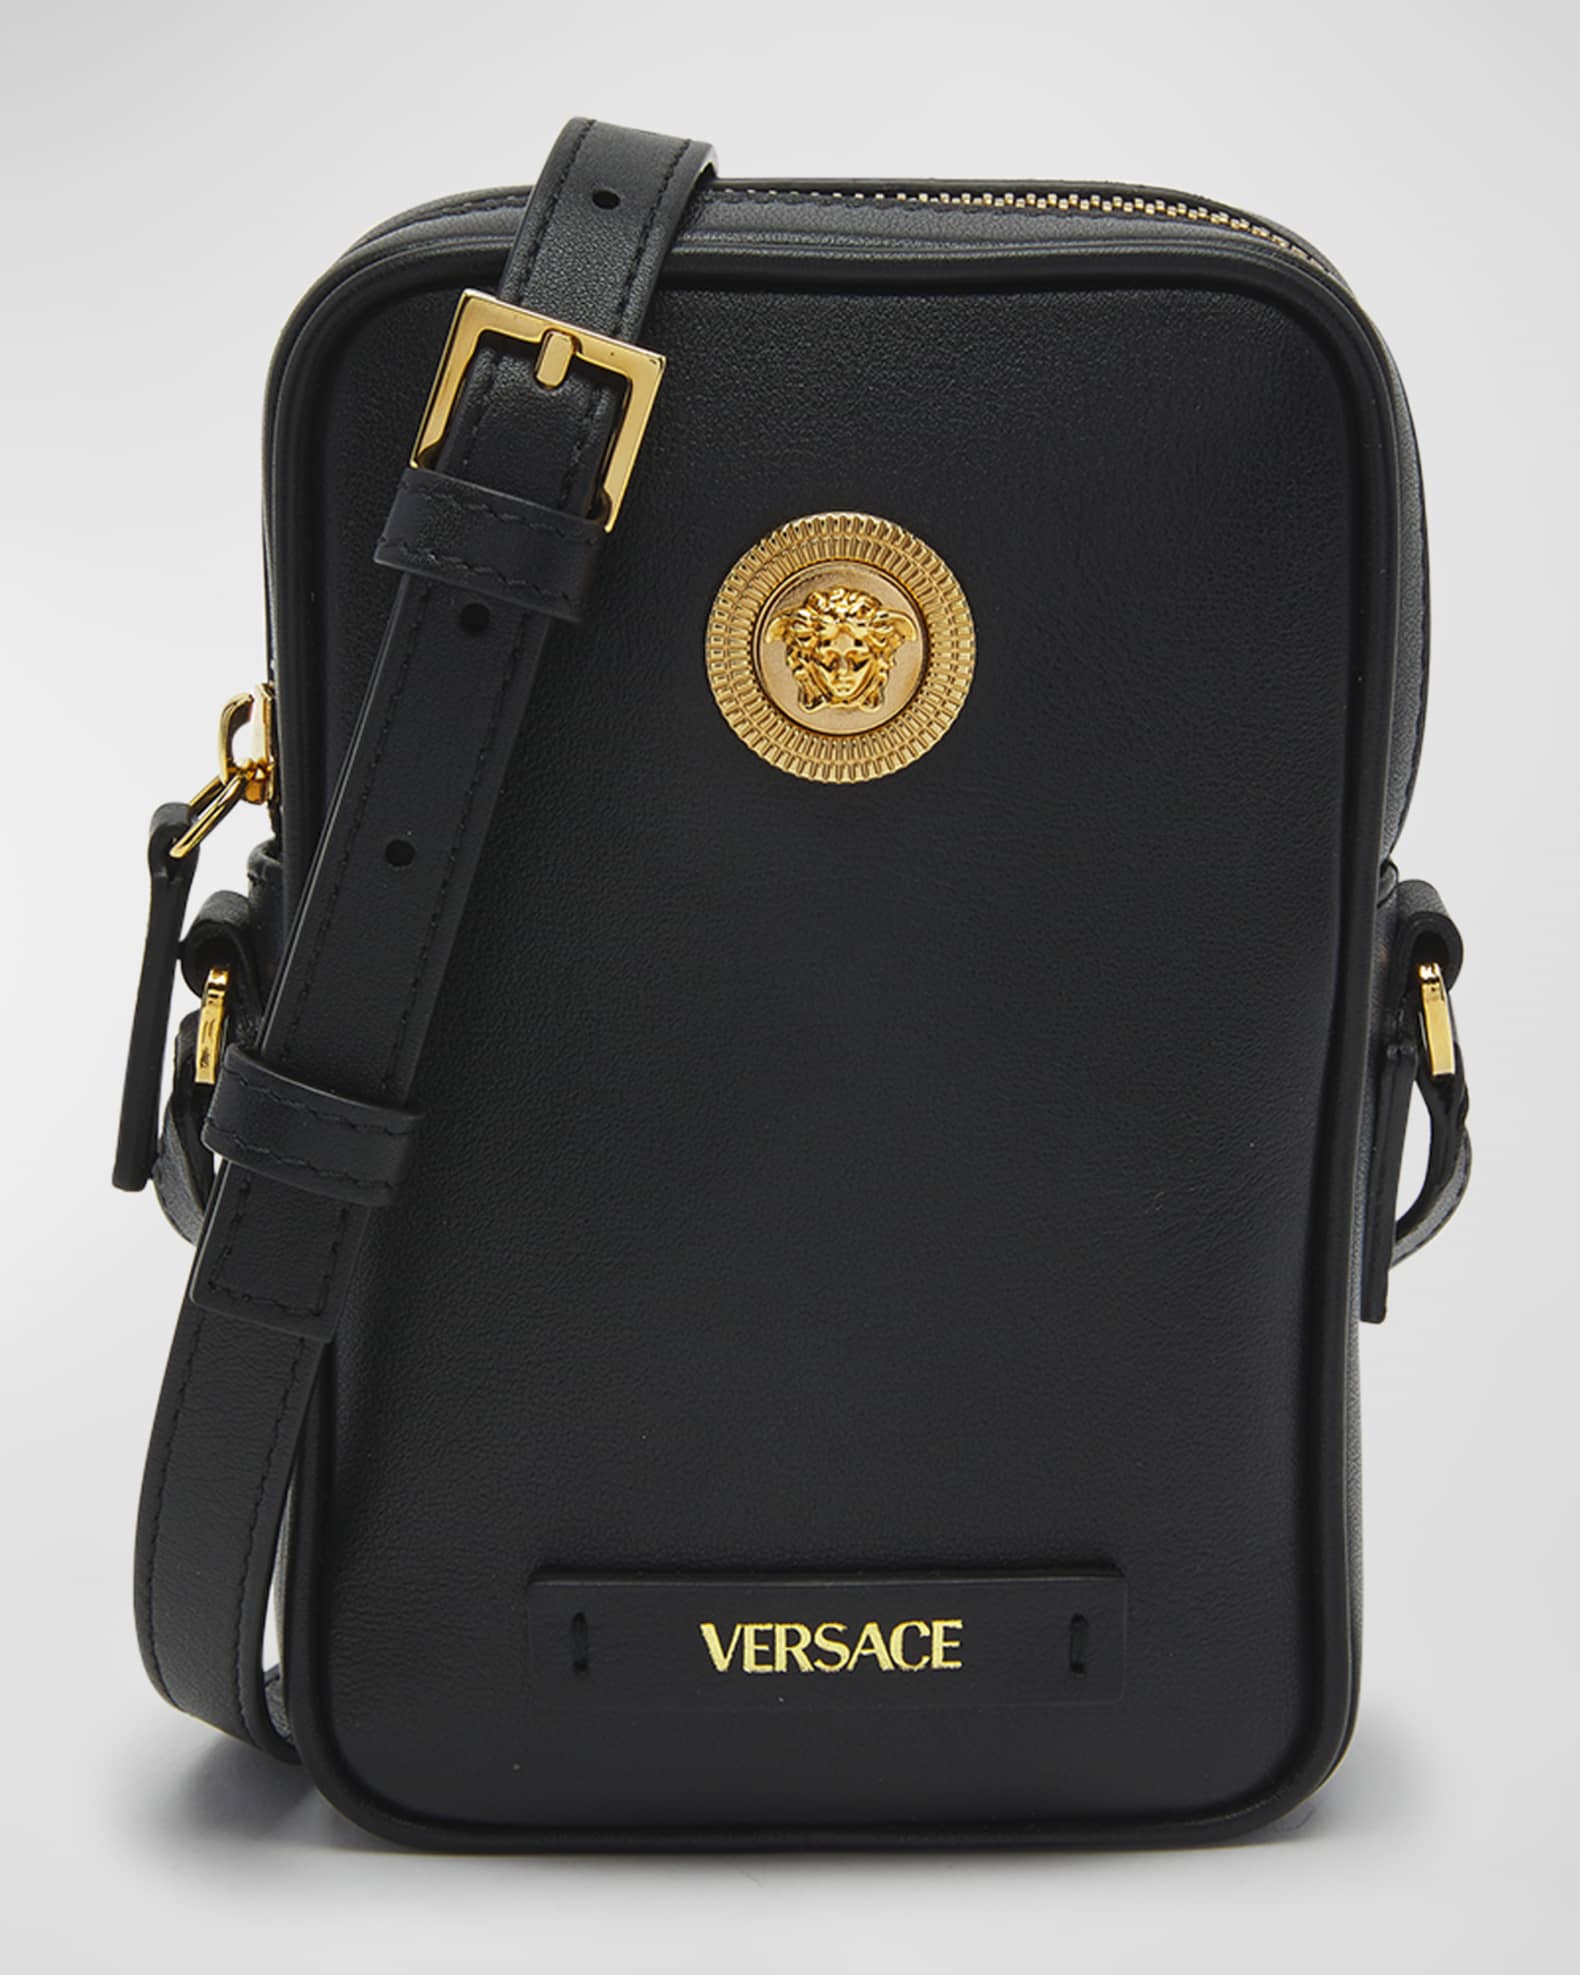 Versace Medusa Biggie Crossbody Bag for Men